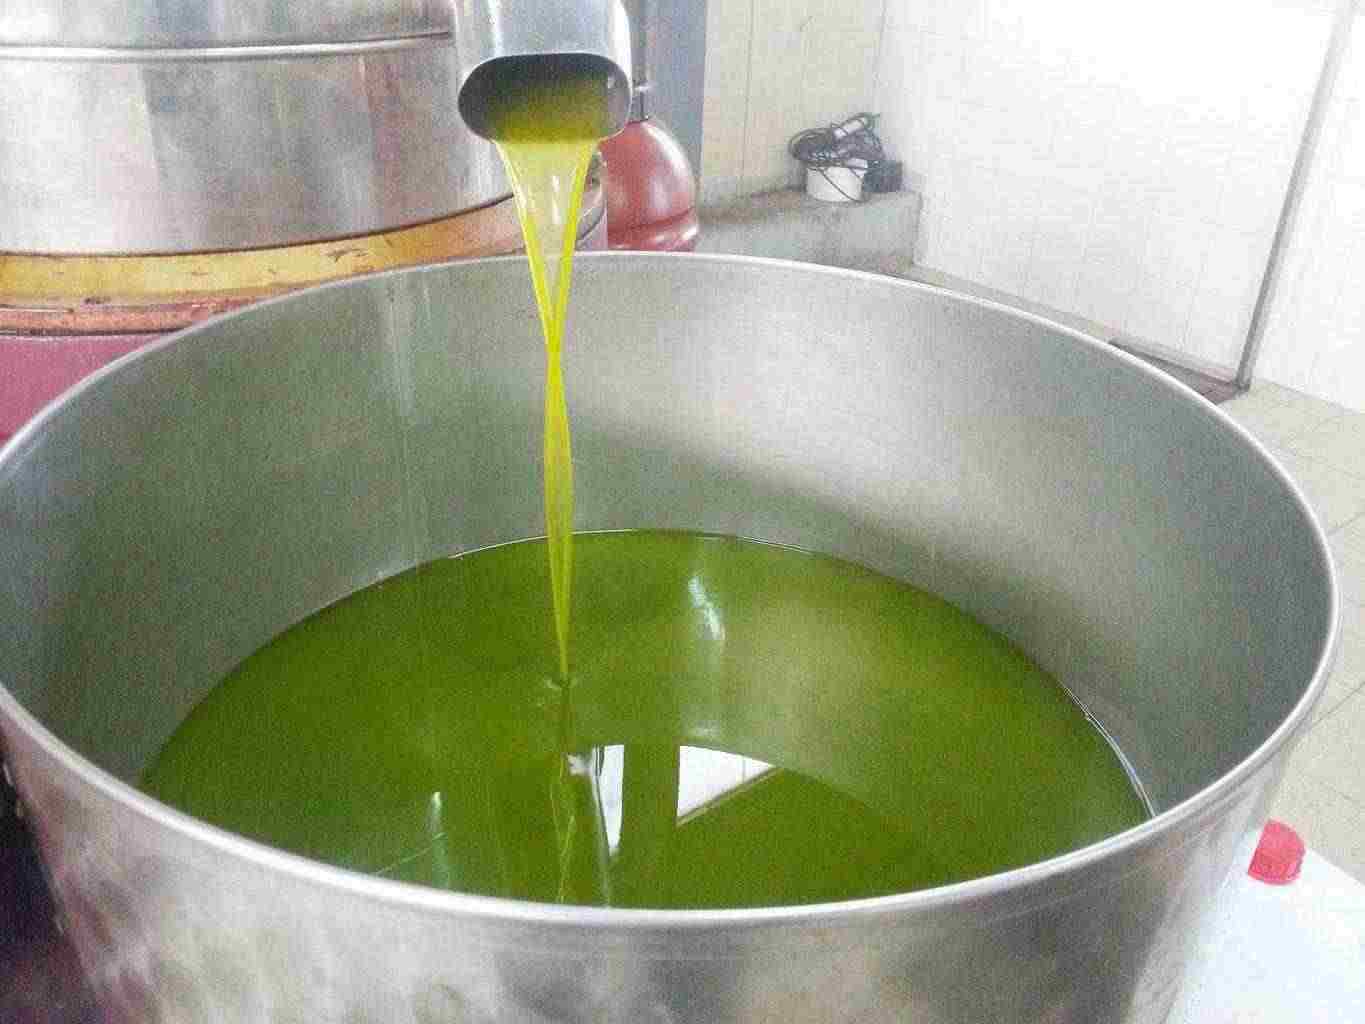 Olio extravergine d'oliva 